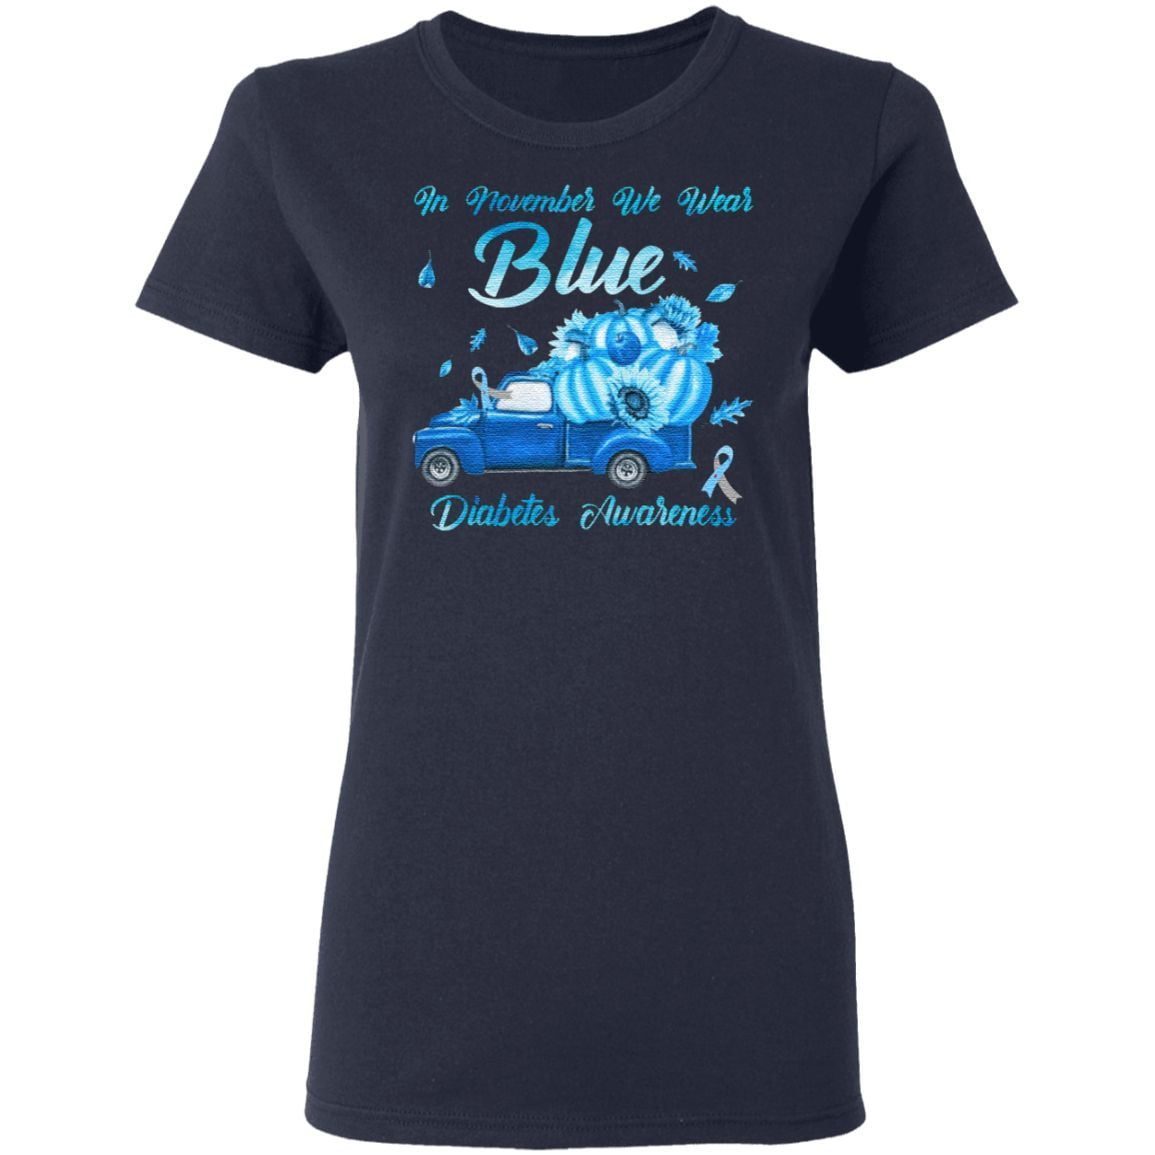 In November We Wear Blue Truck Diabetes Awareness T-Shirt